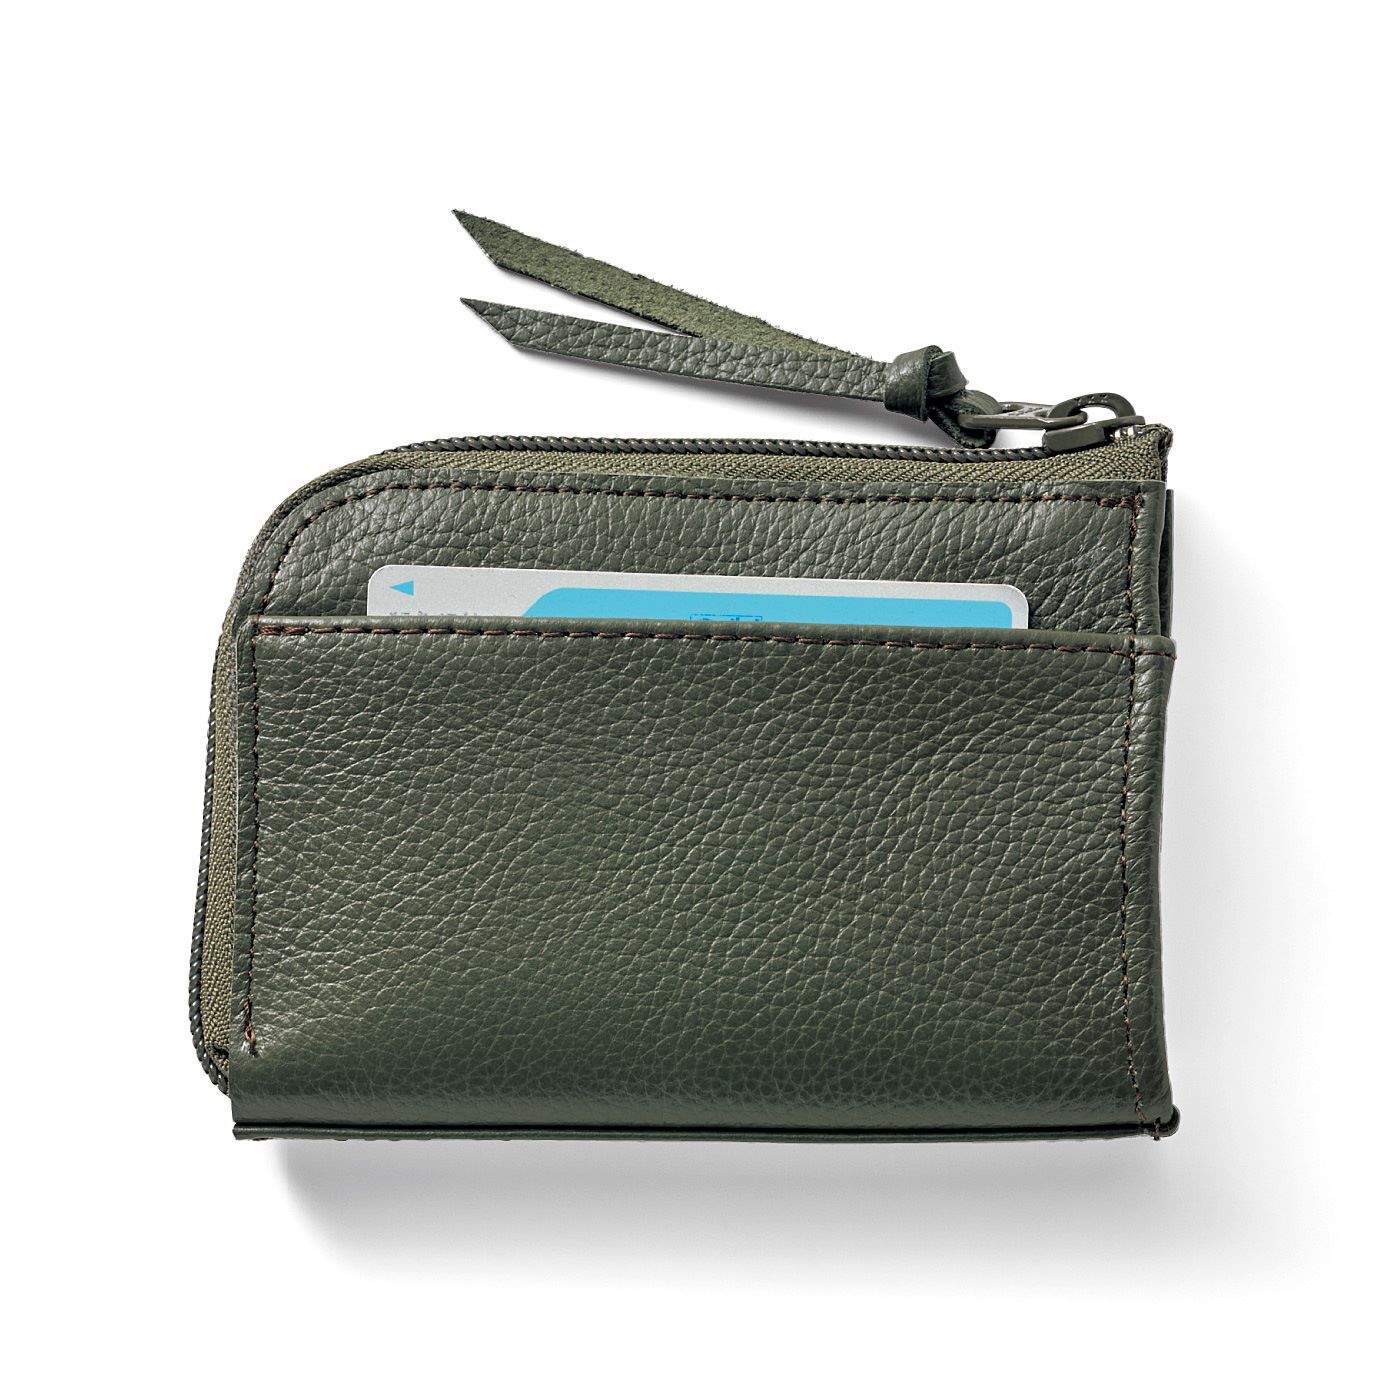 USEDo|ちょうどいい大きさが手になじむ　本革ミニマム財布〈モスグリーン〉|BACK よく使うカードを入れると便利な背面ポケット付き。